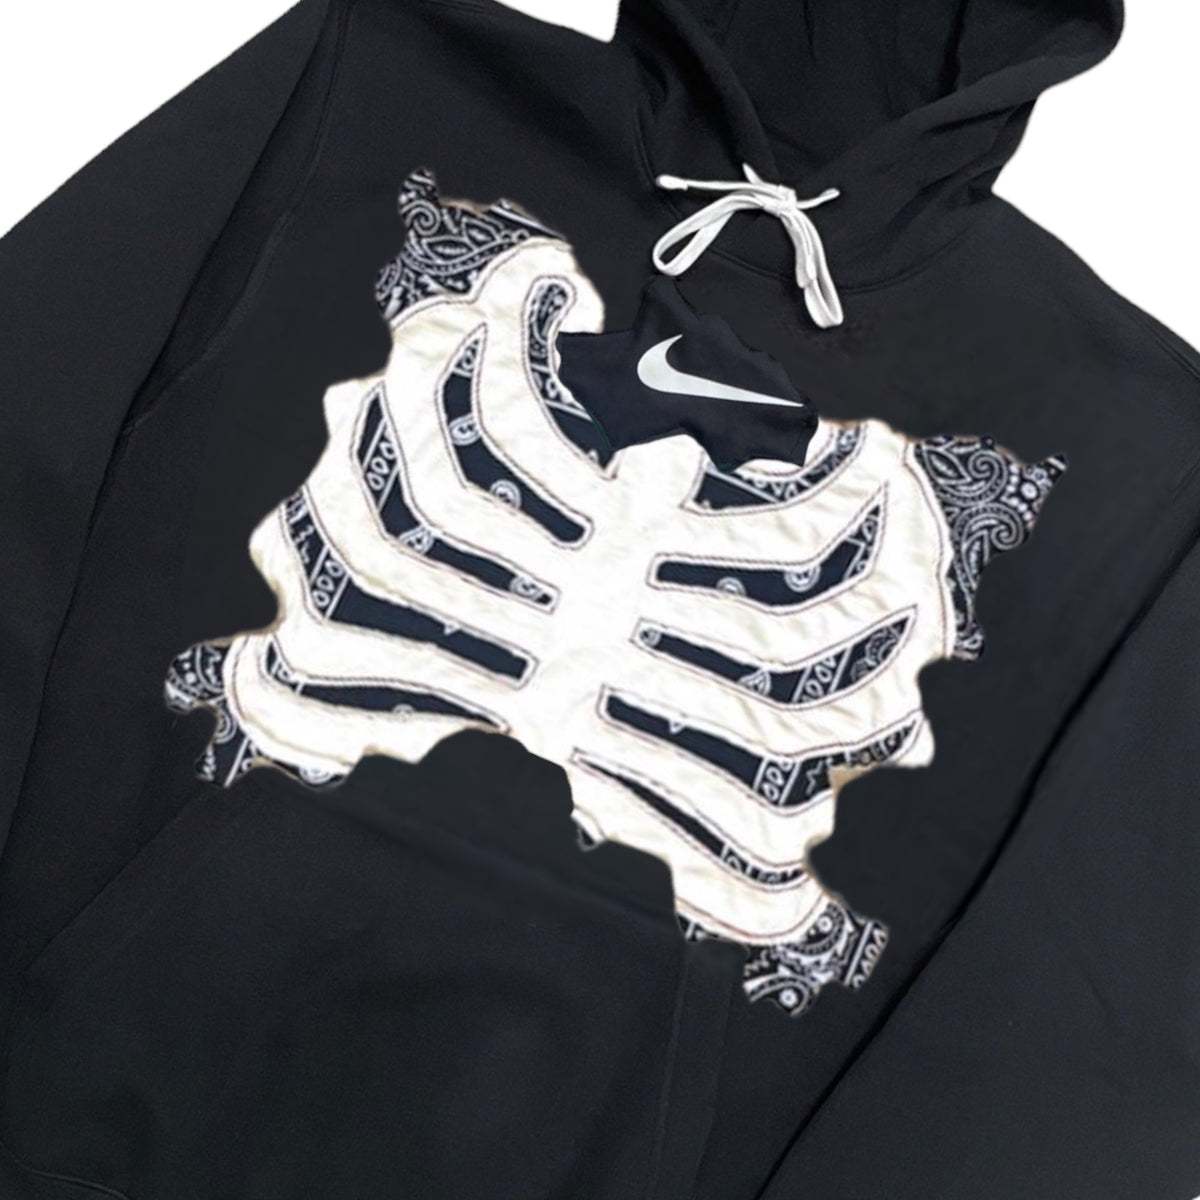 NEW WITH TAG] Custom Sweatshirt Bandana – Black Annanovanta Skeleton